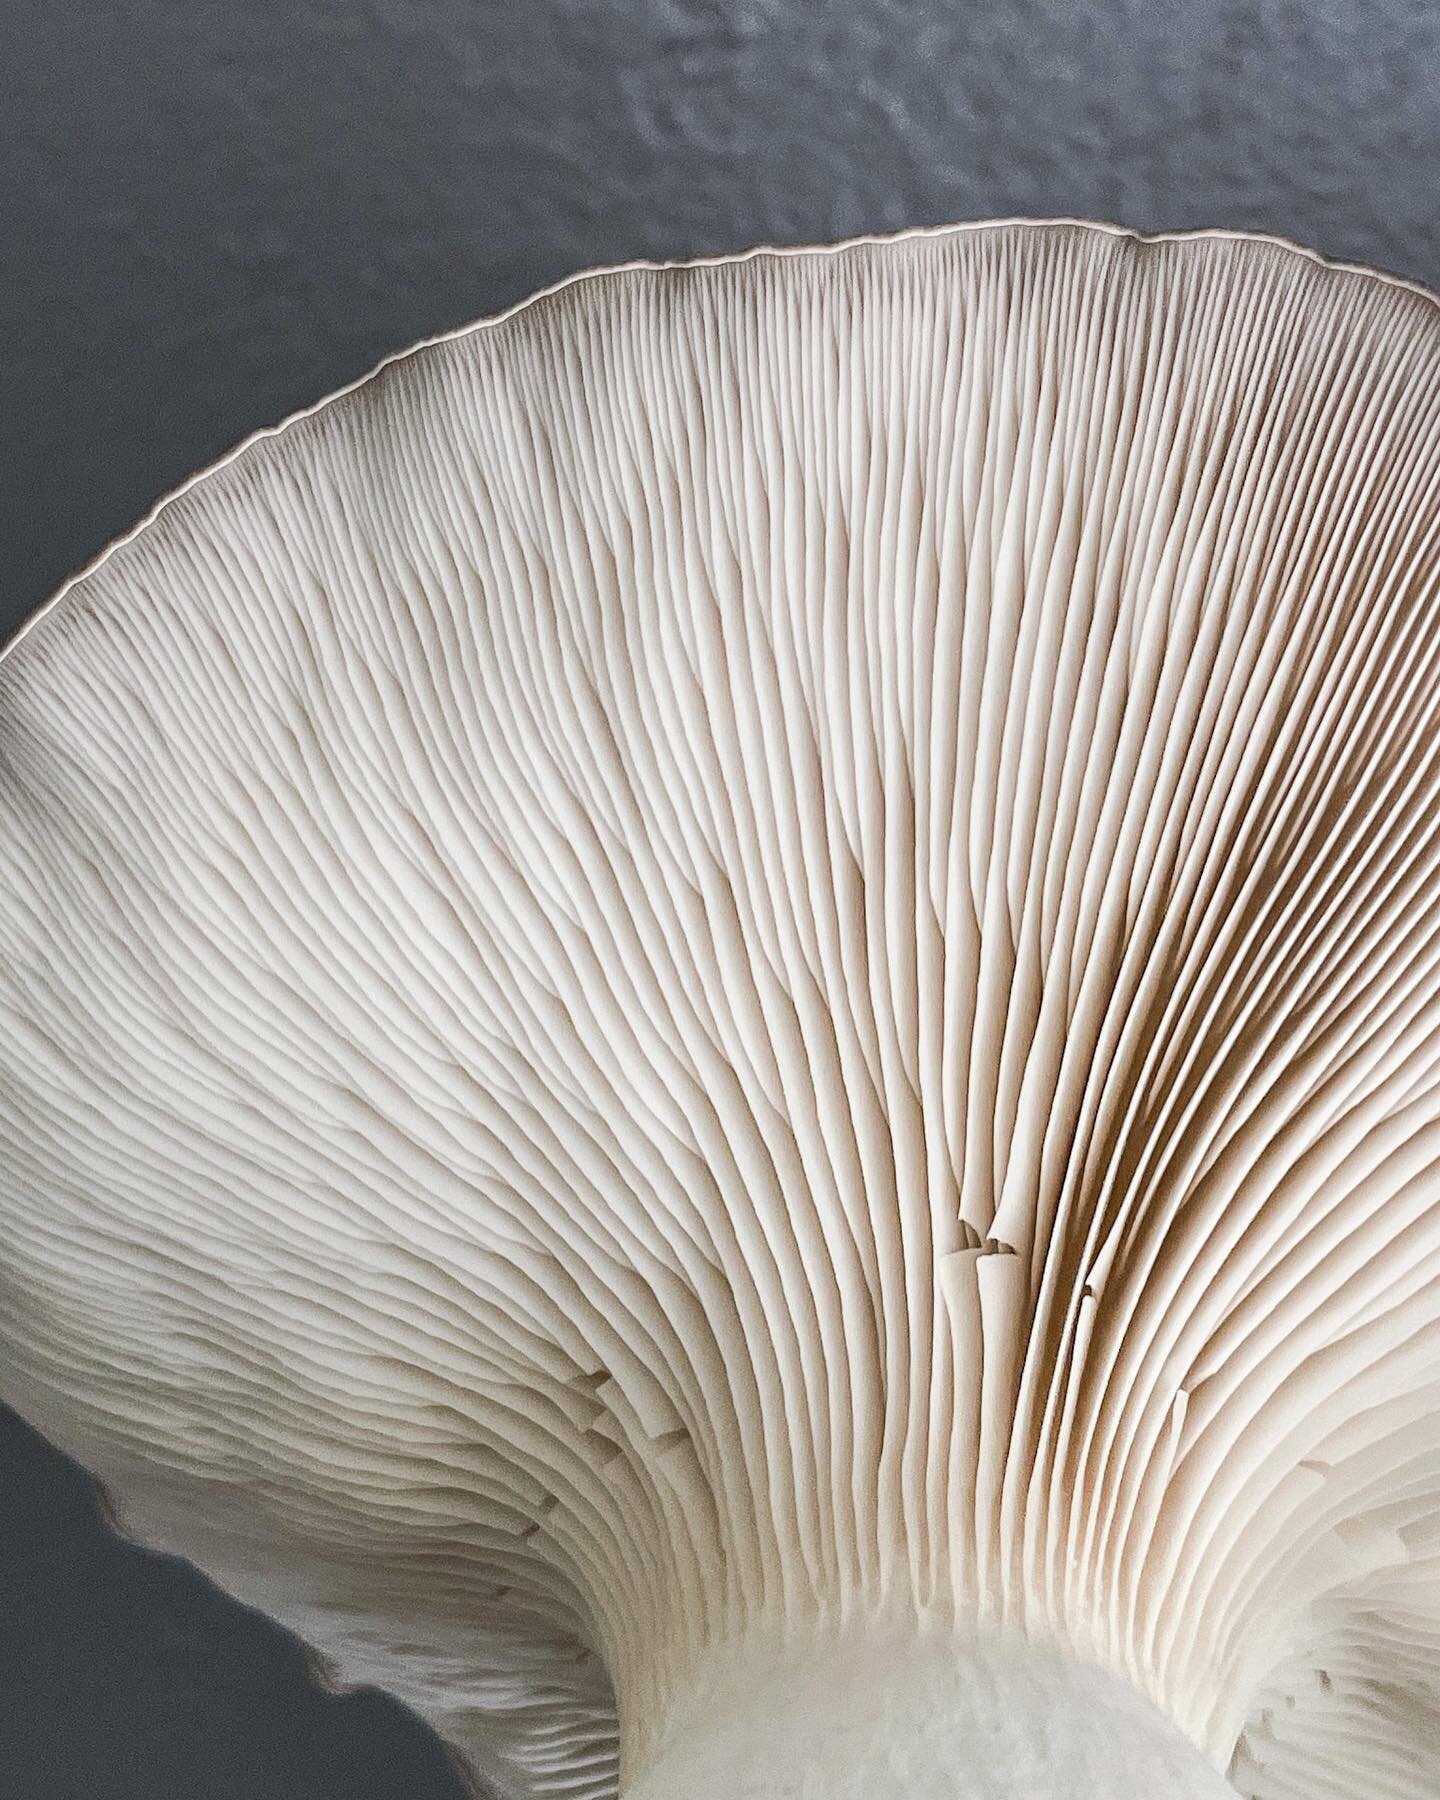 One huge Black Pearl Oyster mushroom with beautiful gills 😍🤤🍄. #blackpearloysters #gourmetmushrooms #urbanfarm #denver #gills